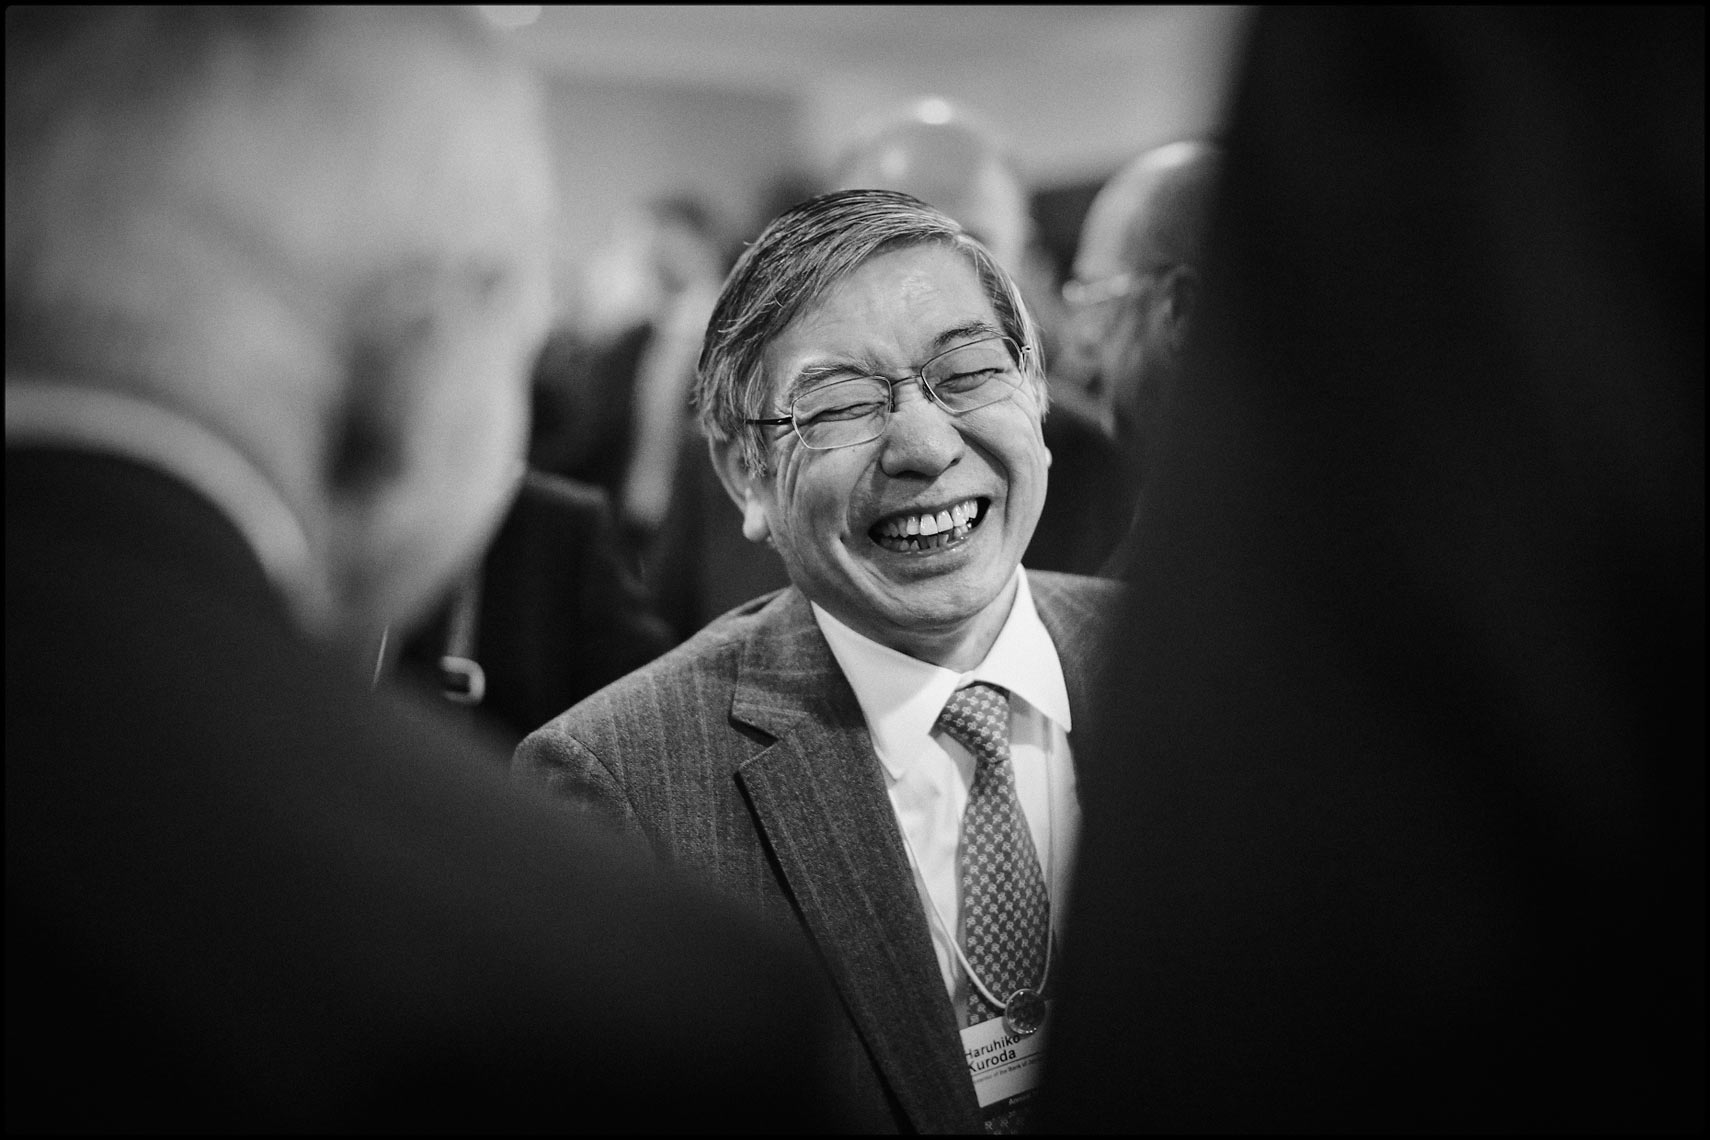 Japanese central bank chief Haruhiko Kuroda